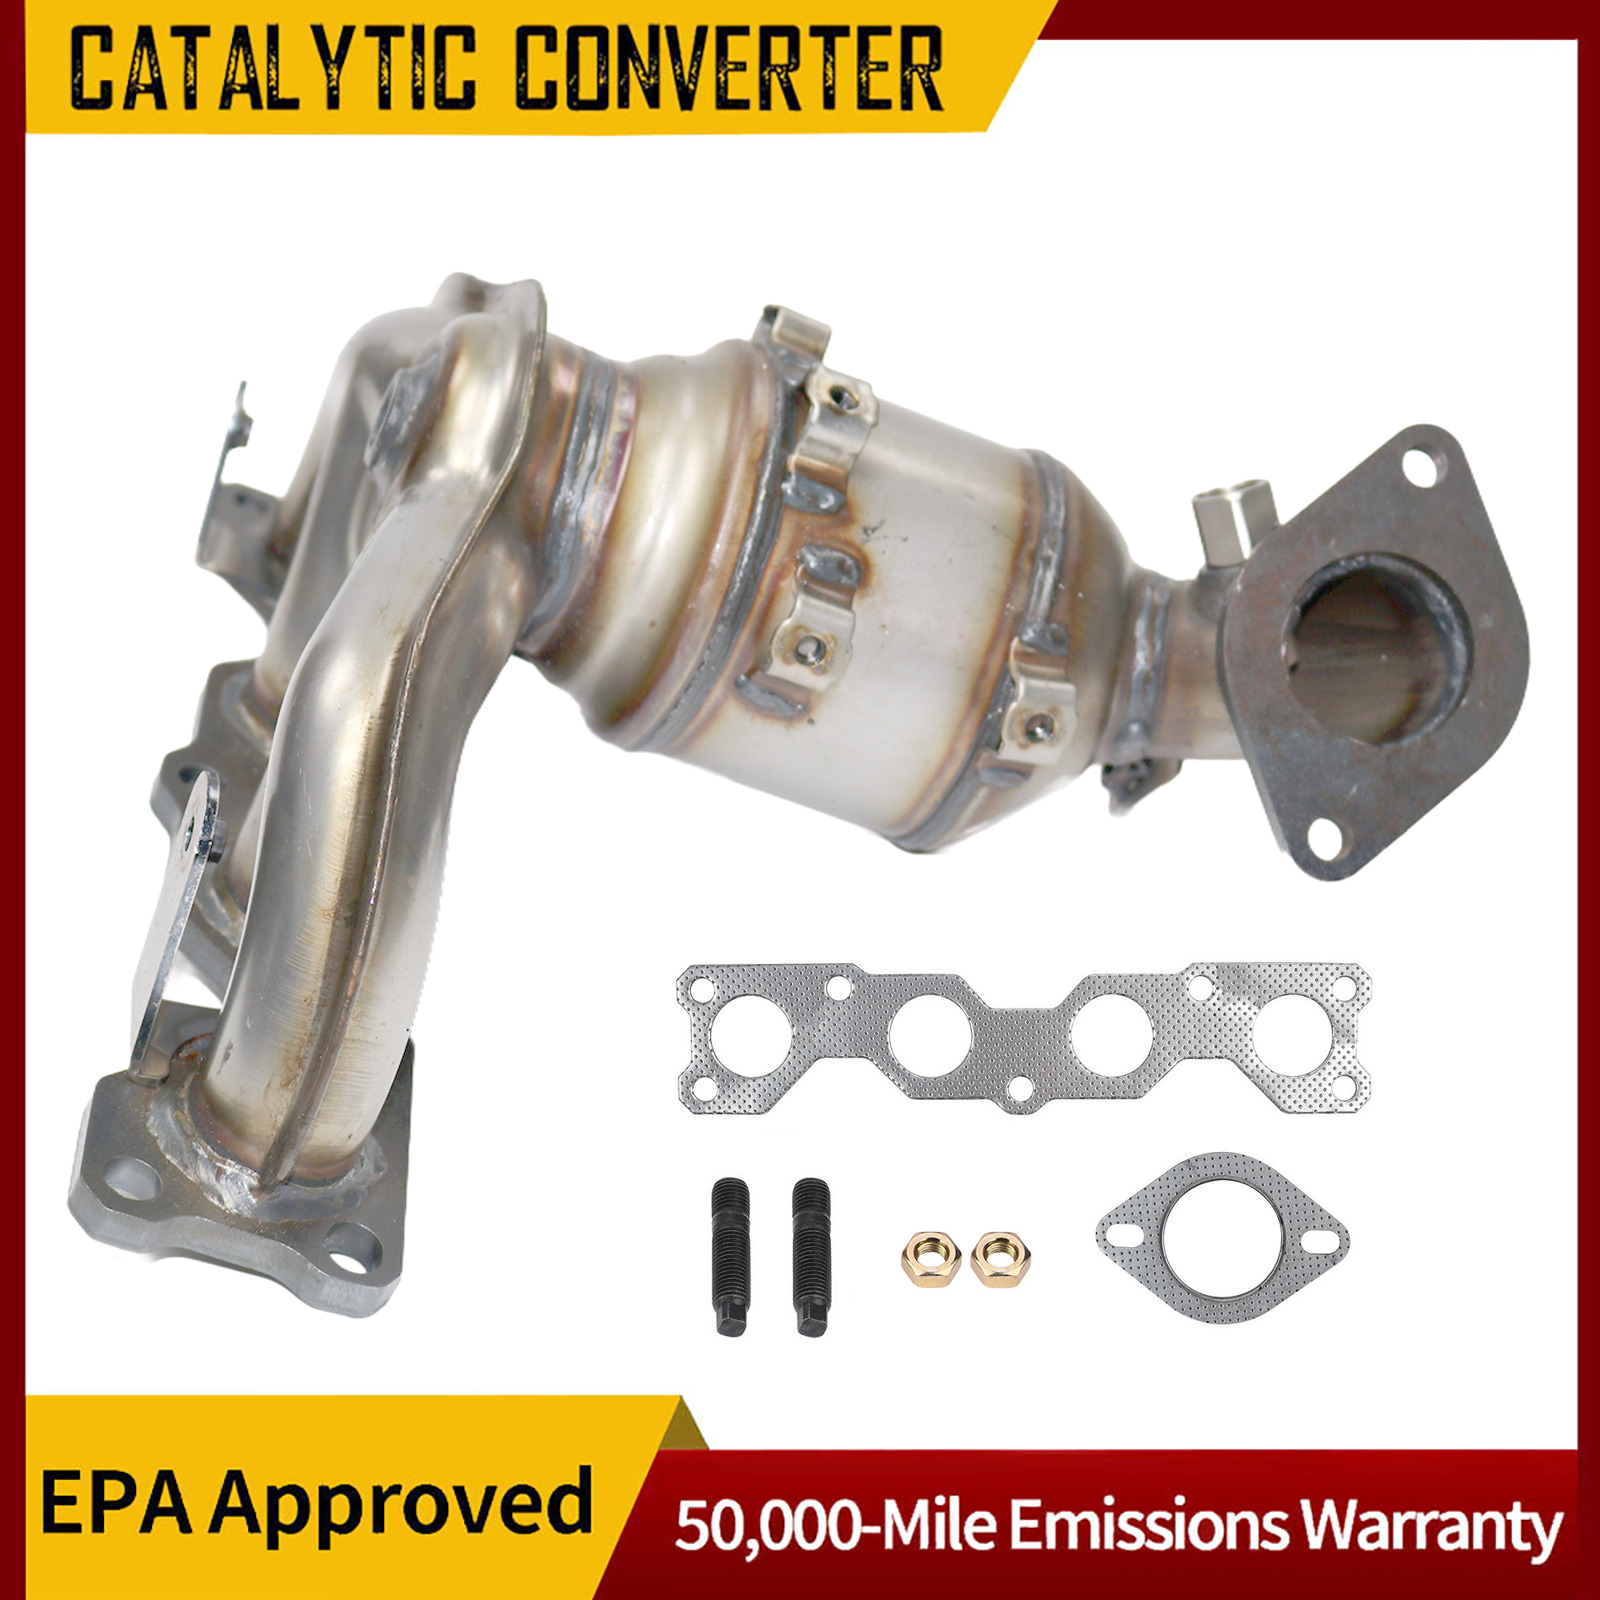 Exhaust Catalytic Converters for 2009-2015 Hyundai Sonata Kia Optima Forte 2.4L